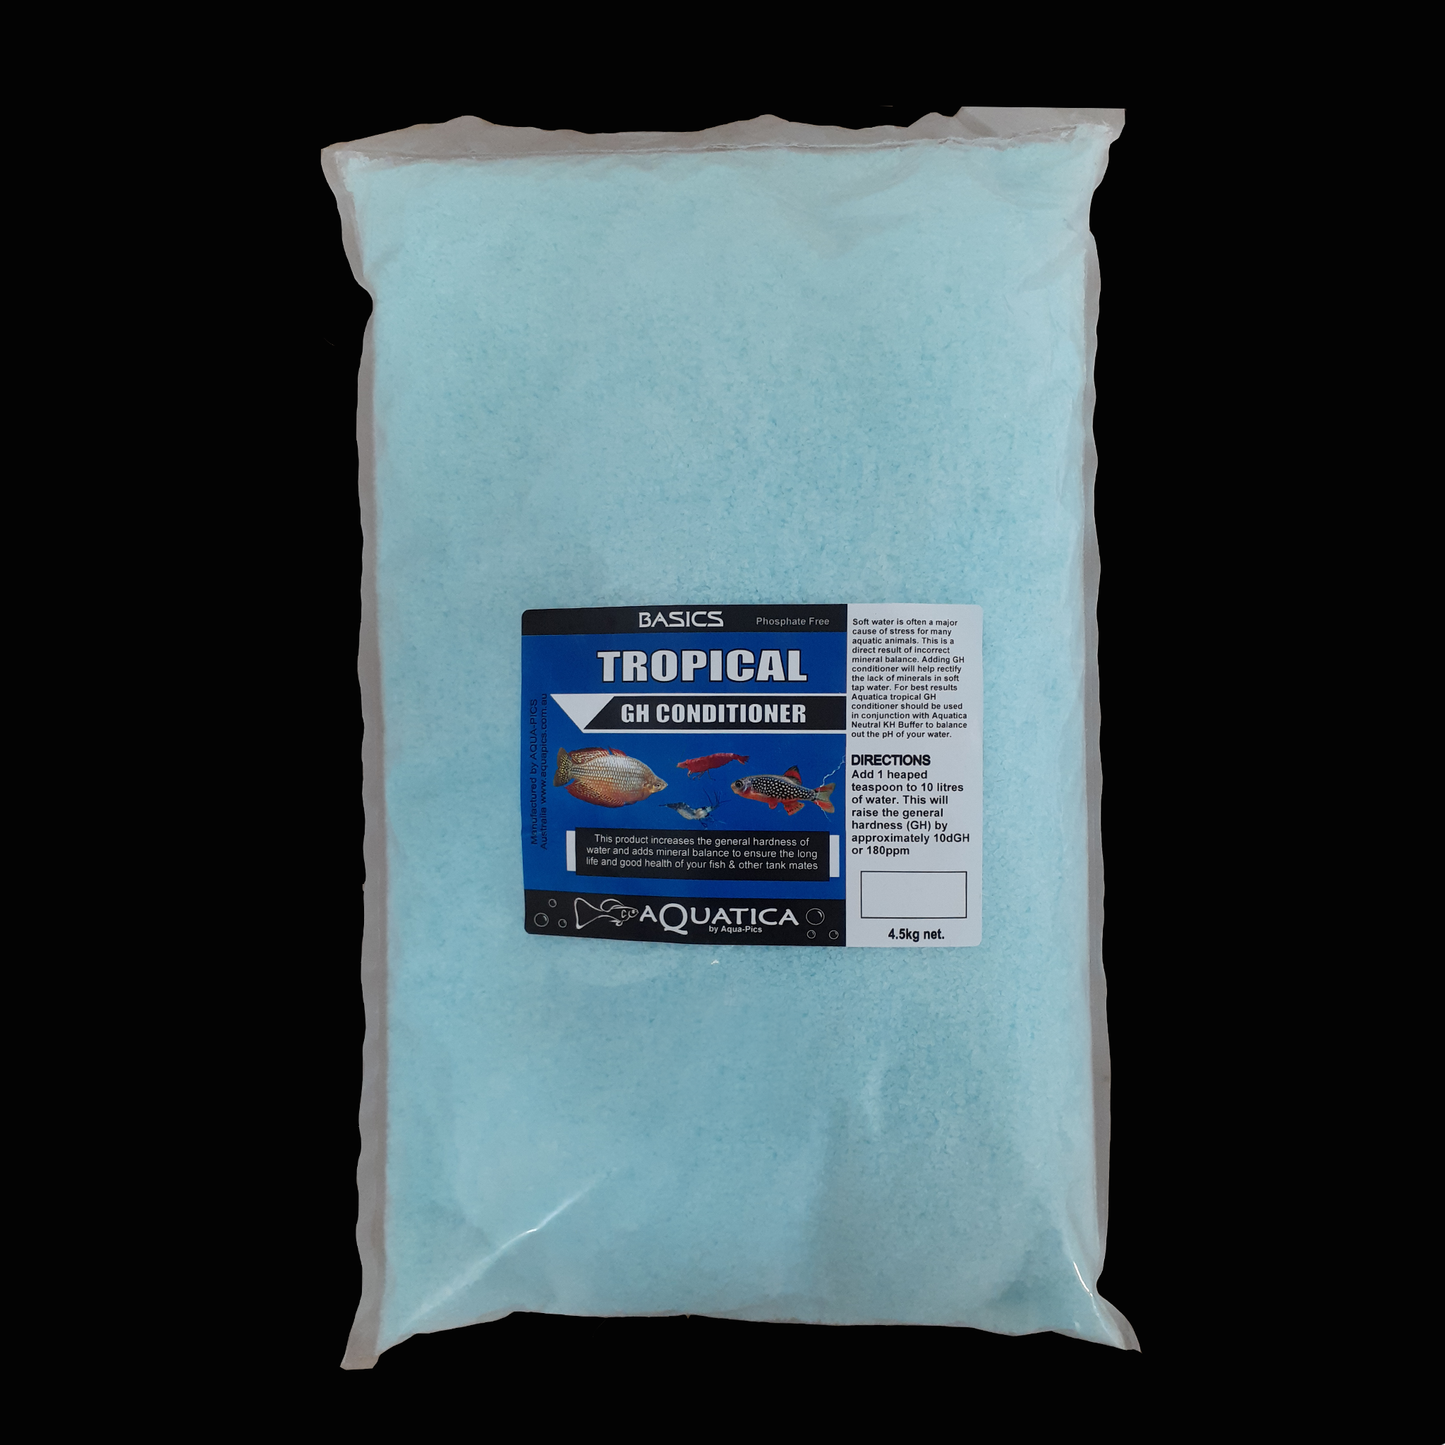 Aquatica Basics Tropical GH Conditioner 4.5kg bag